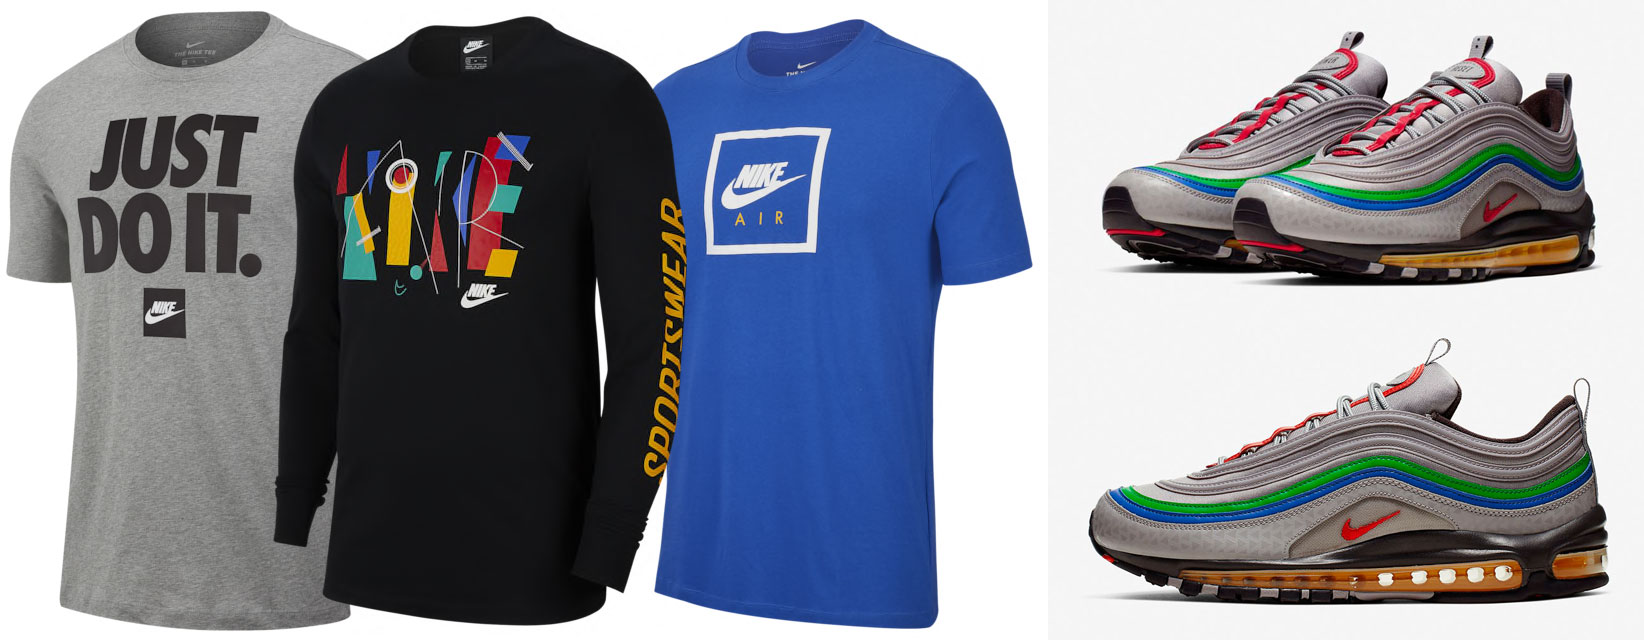 Nike Air Max 97 Nintendo 64 Shirts to 